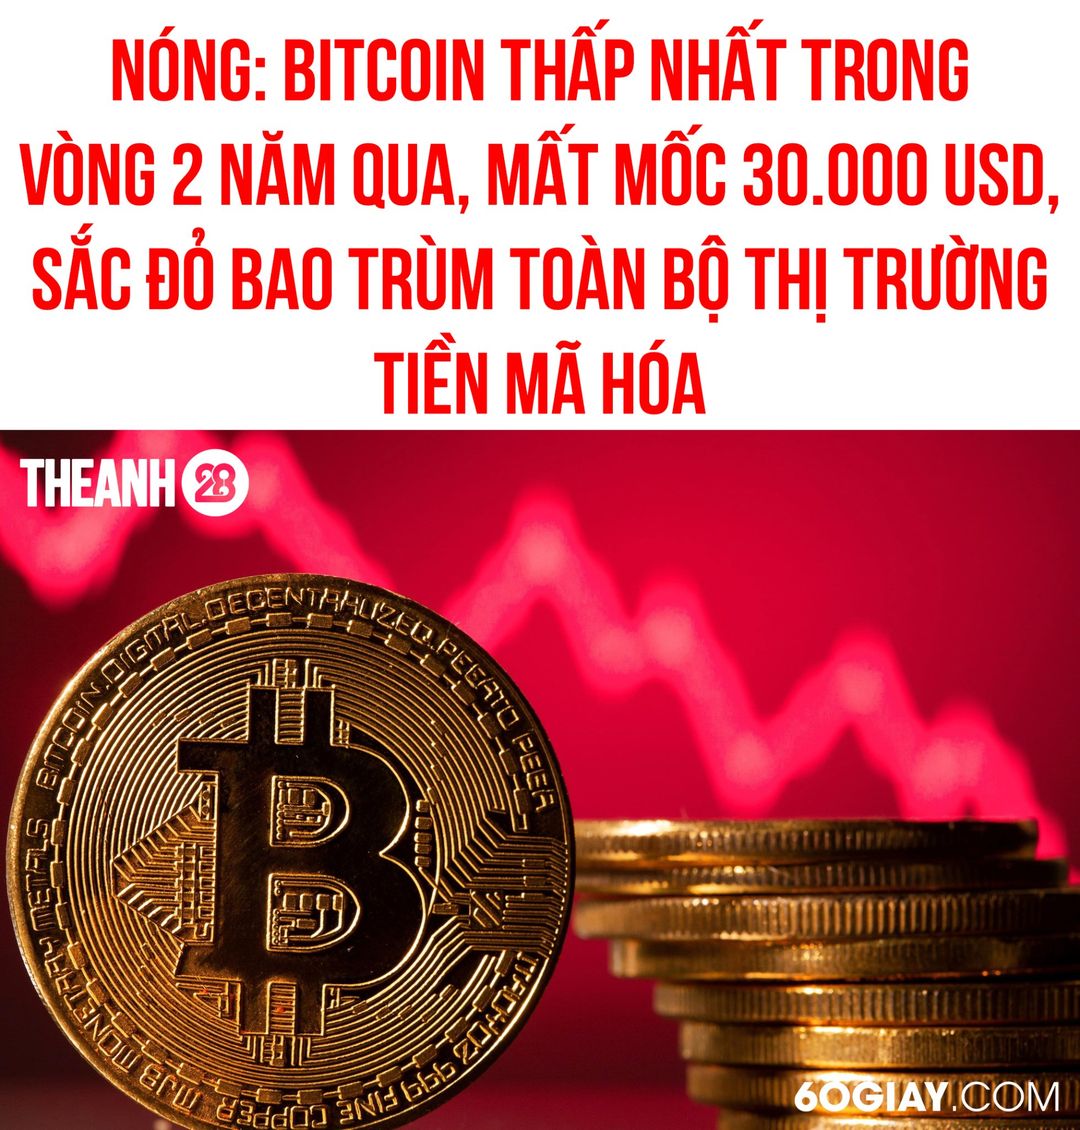 Diem-nong-MXH-ngay-10-05-Cong-dong-Trader-Viet-Nam-TraderViet1.jpeg